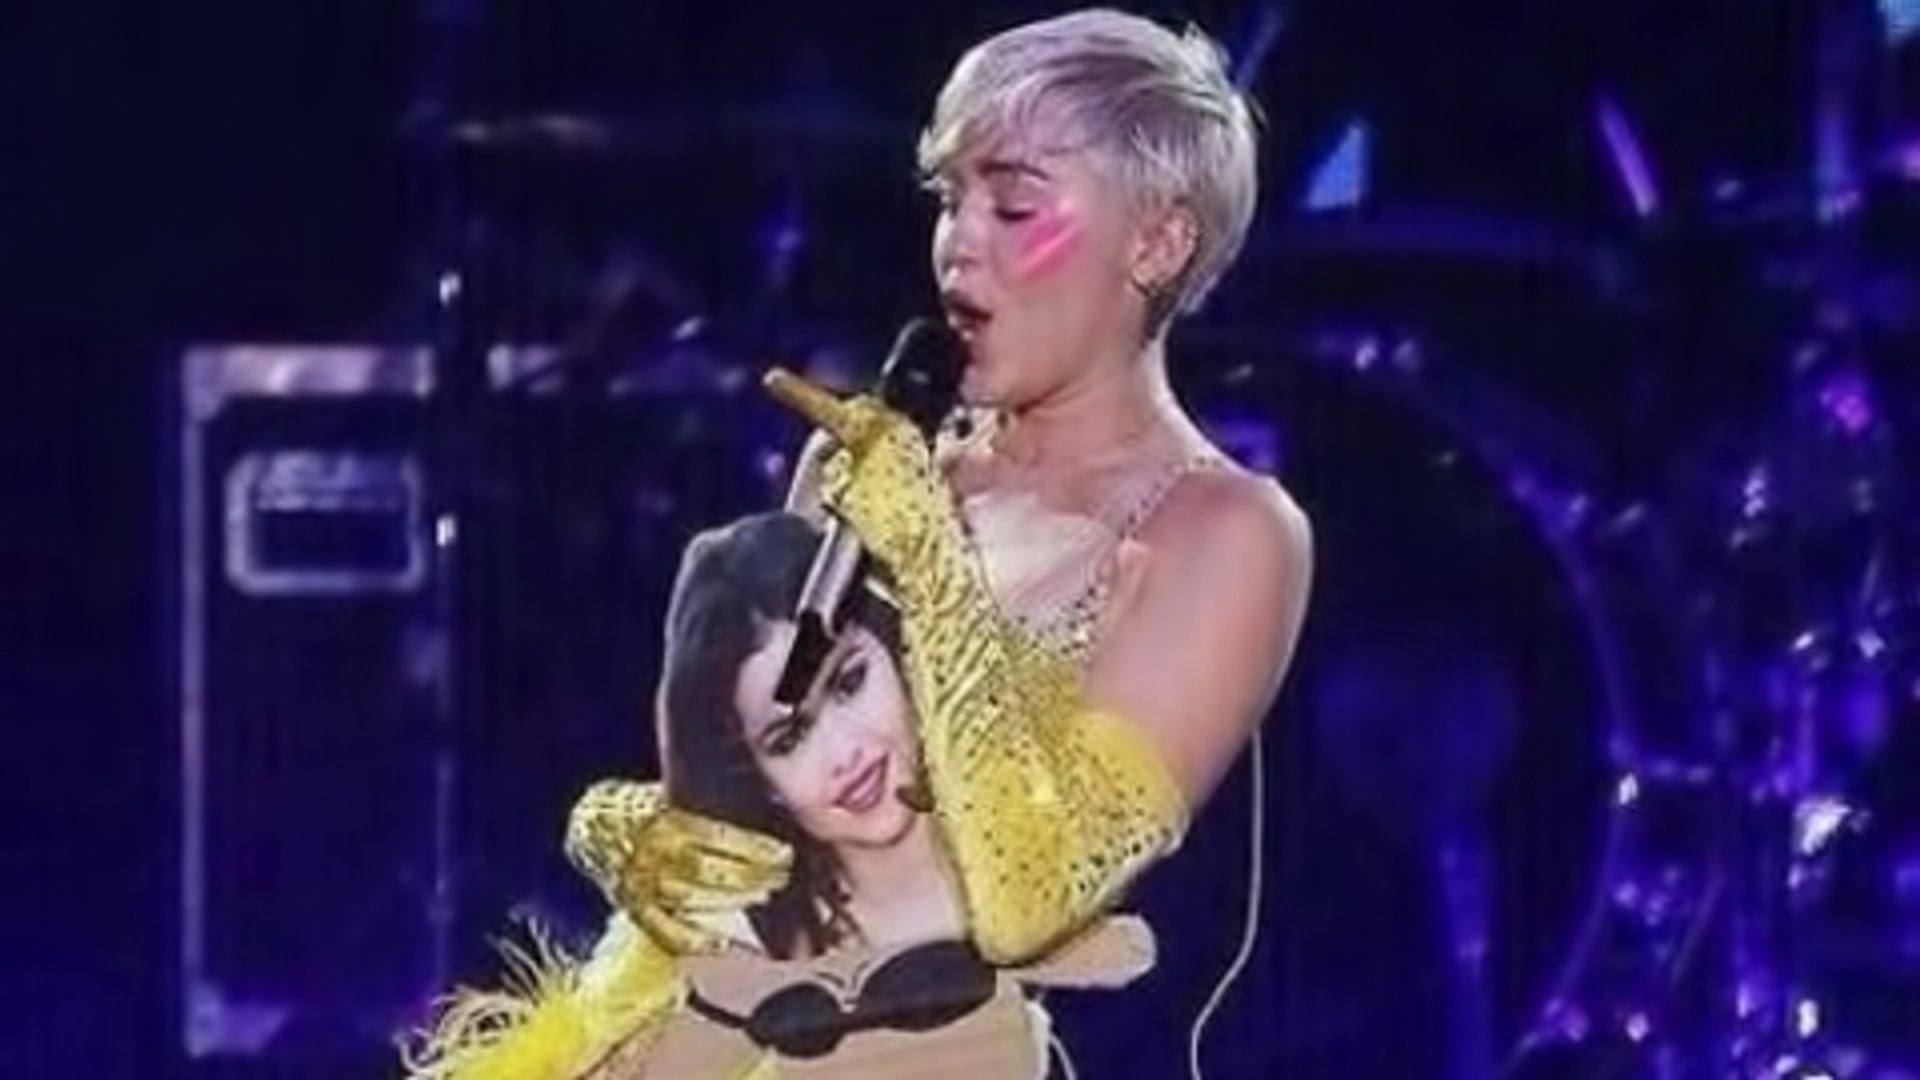 Miley Cyrus Throws Selena Gomez Photo During Concert